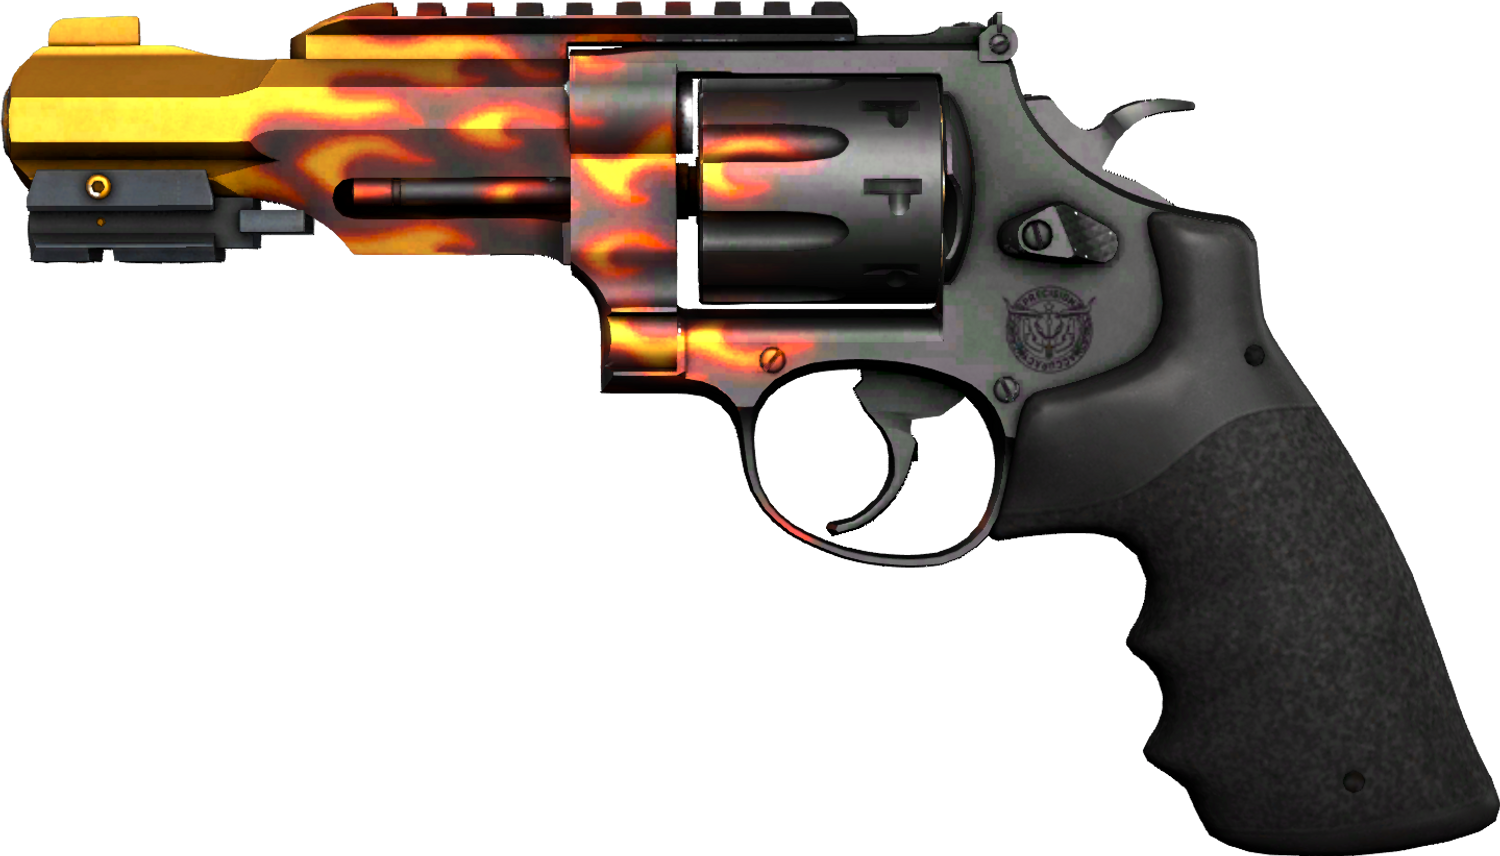 Junkyard Revolver cs go skin download the new version